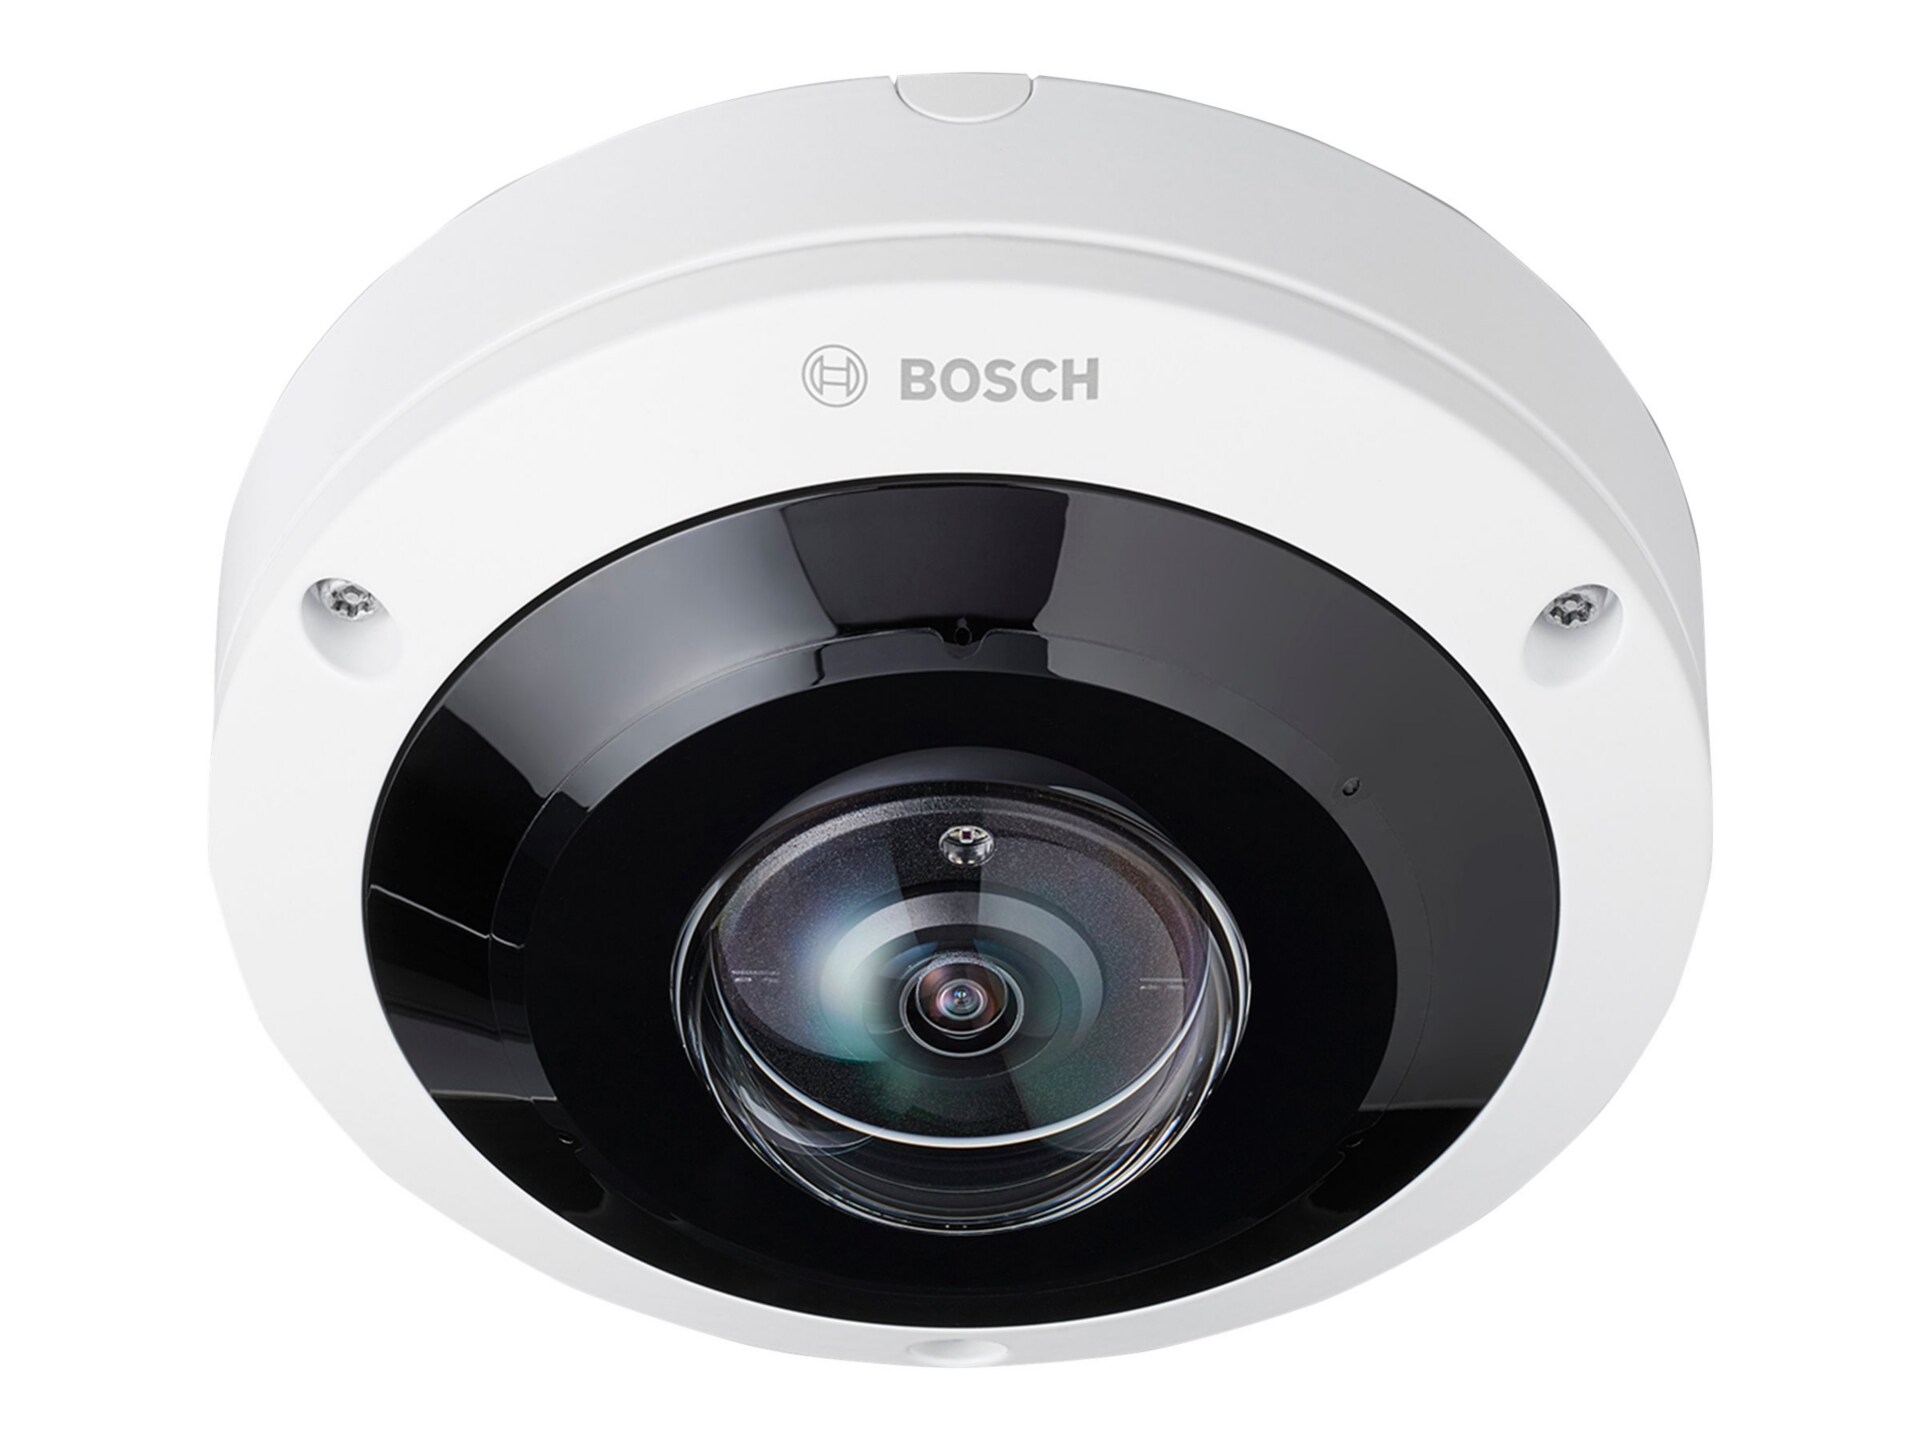 Bosch FLEXIDOME panoramic 5100i IR NDS-5704-F360LE - network surveillance /